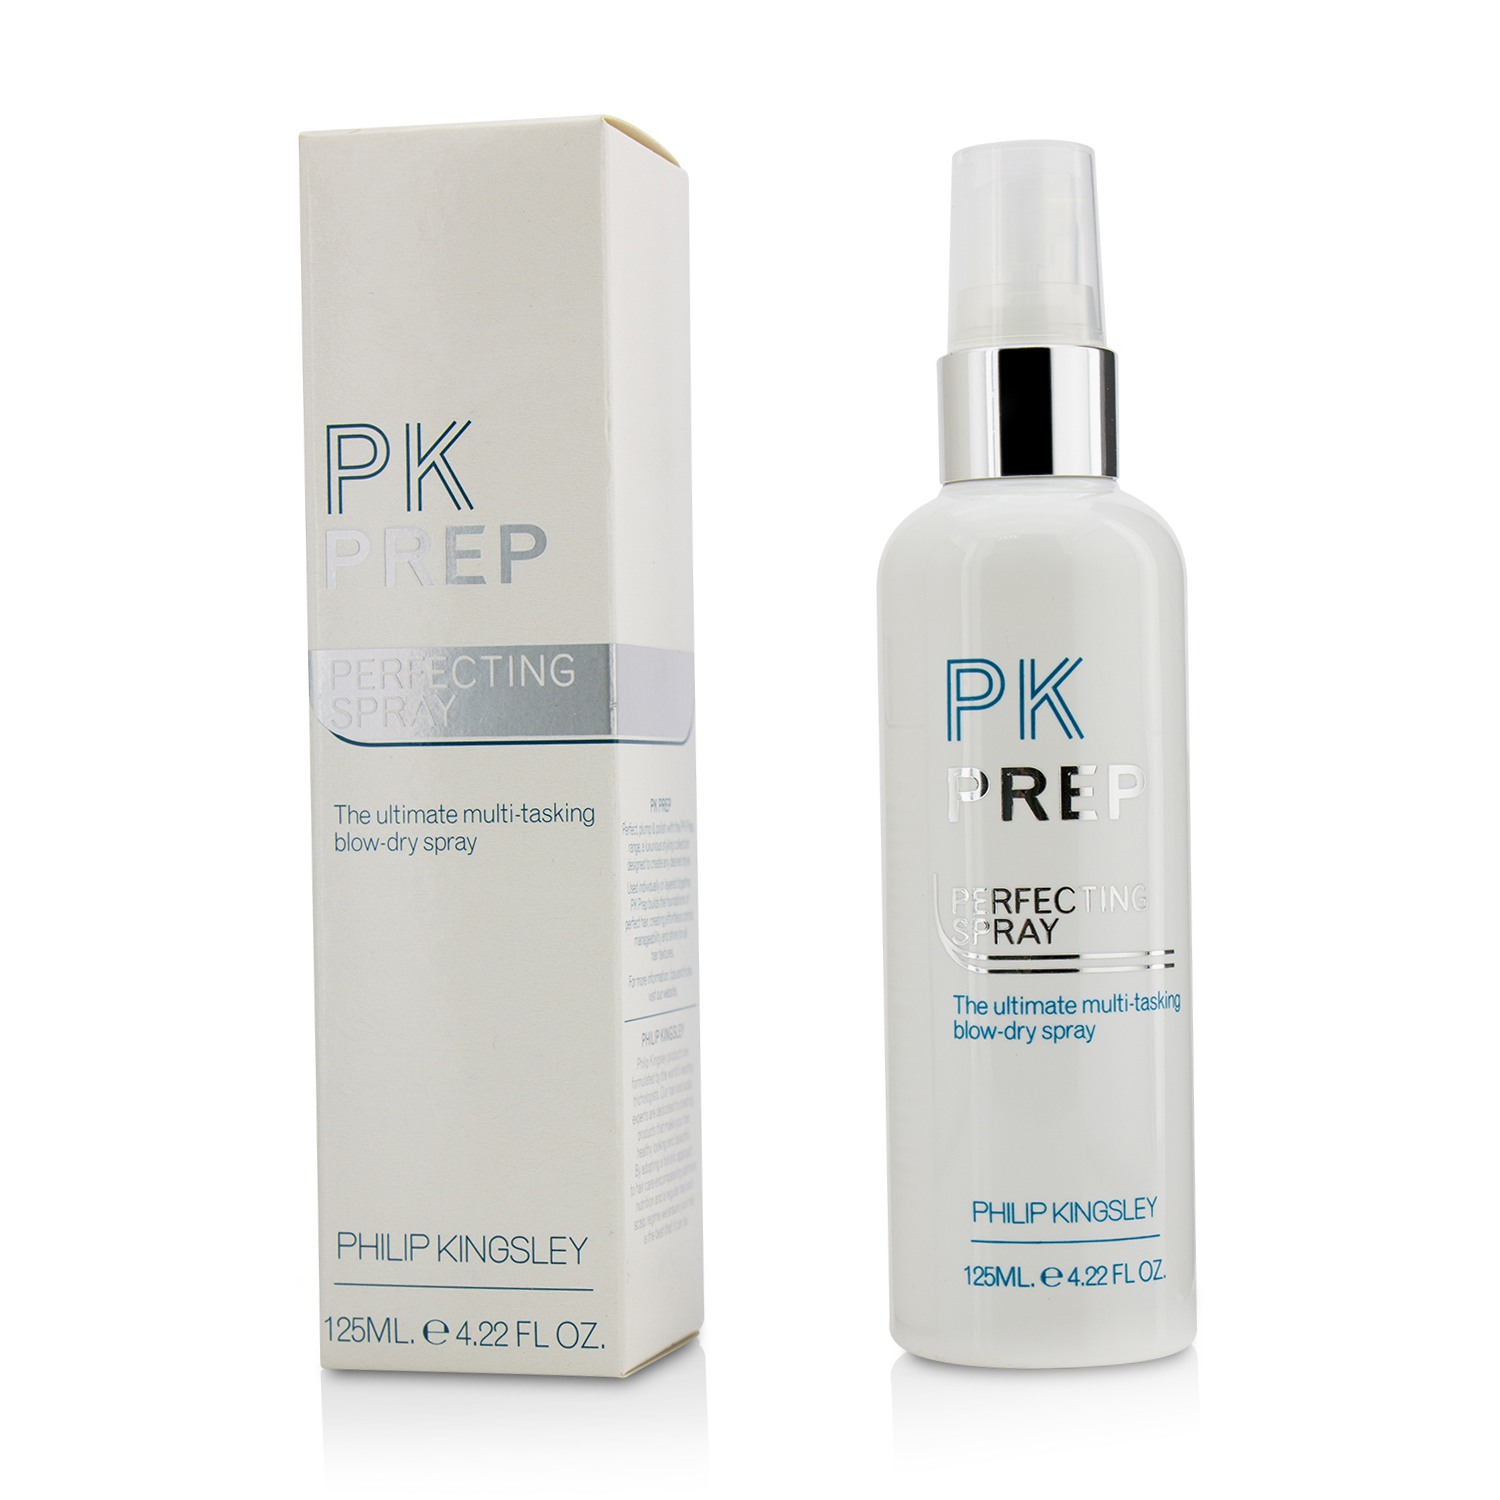 PK Prep Perfecting Spray Philip Kingsley Image